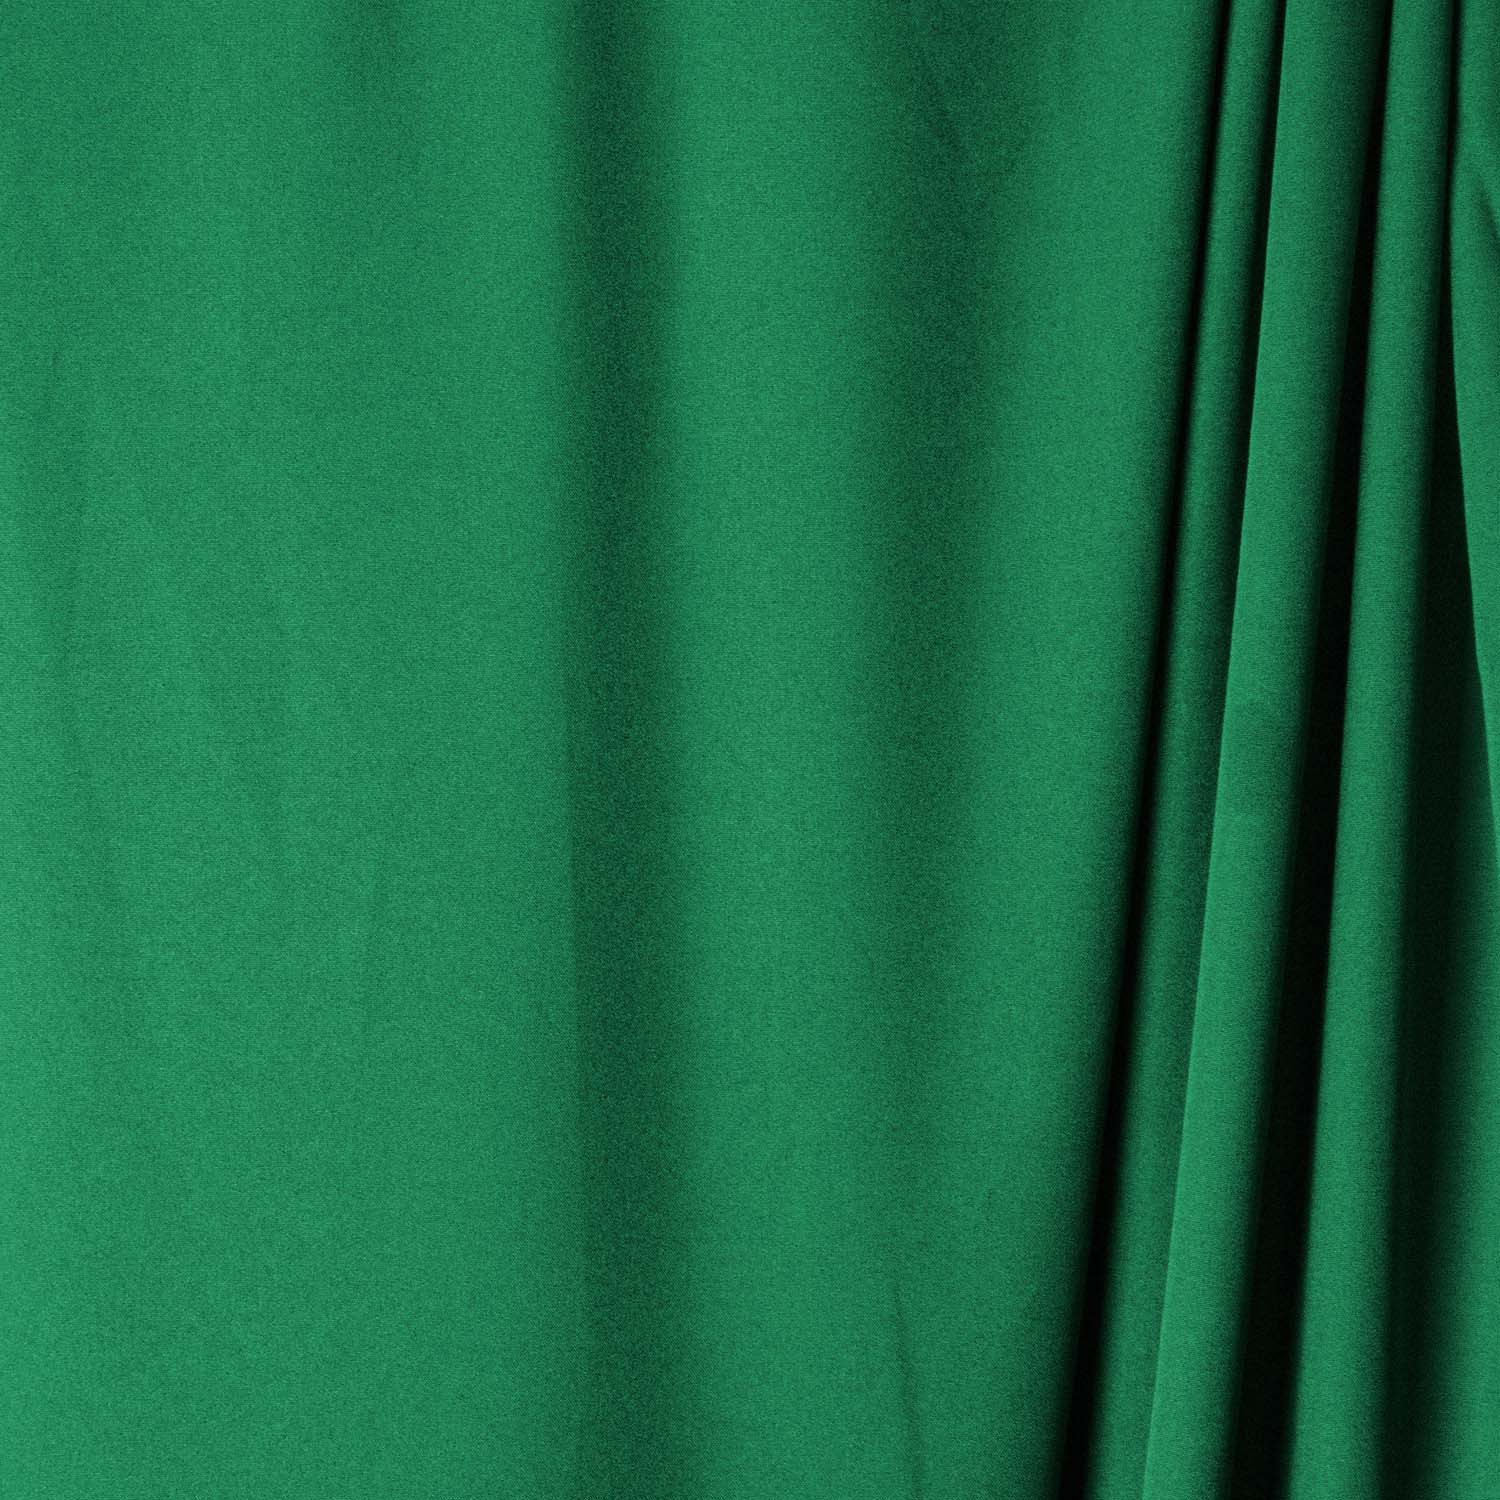 Chroma Green Solid Muslin Wrinkle Resistant Backdrop - Azuri Backdrops